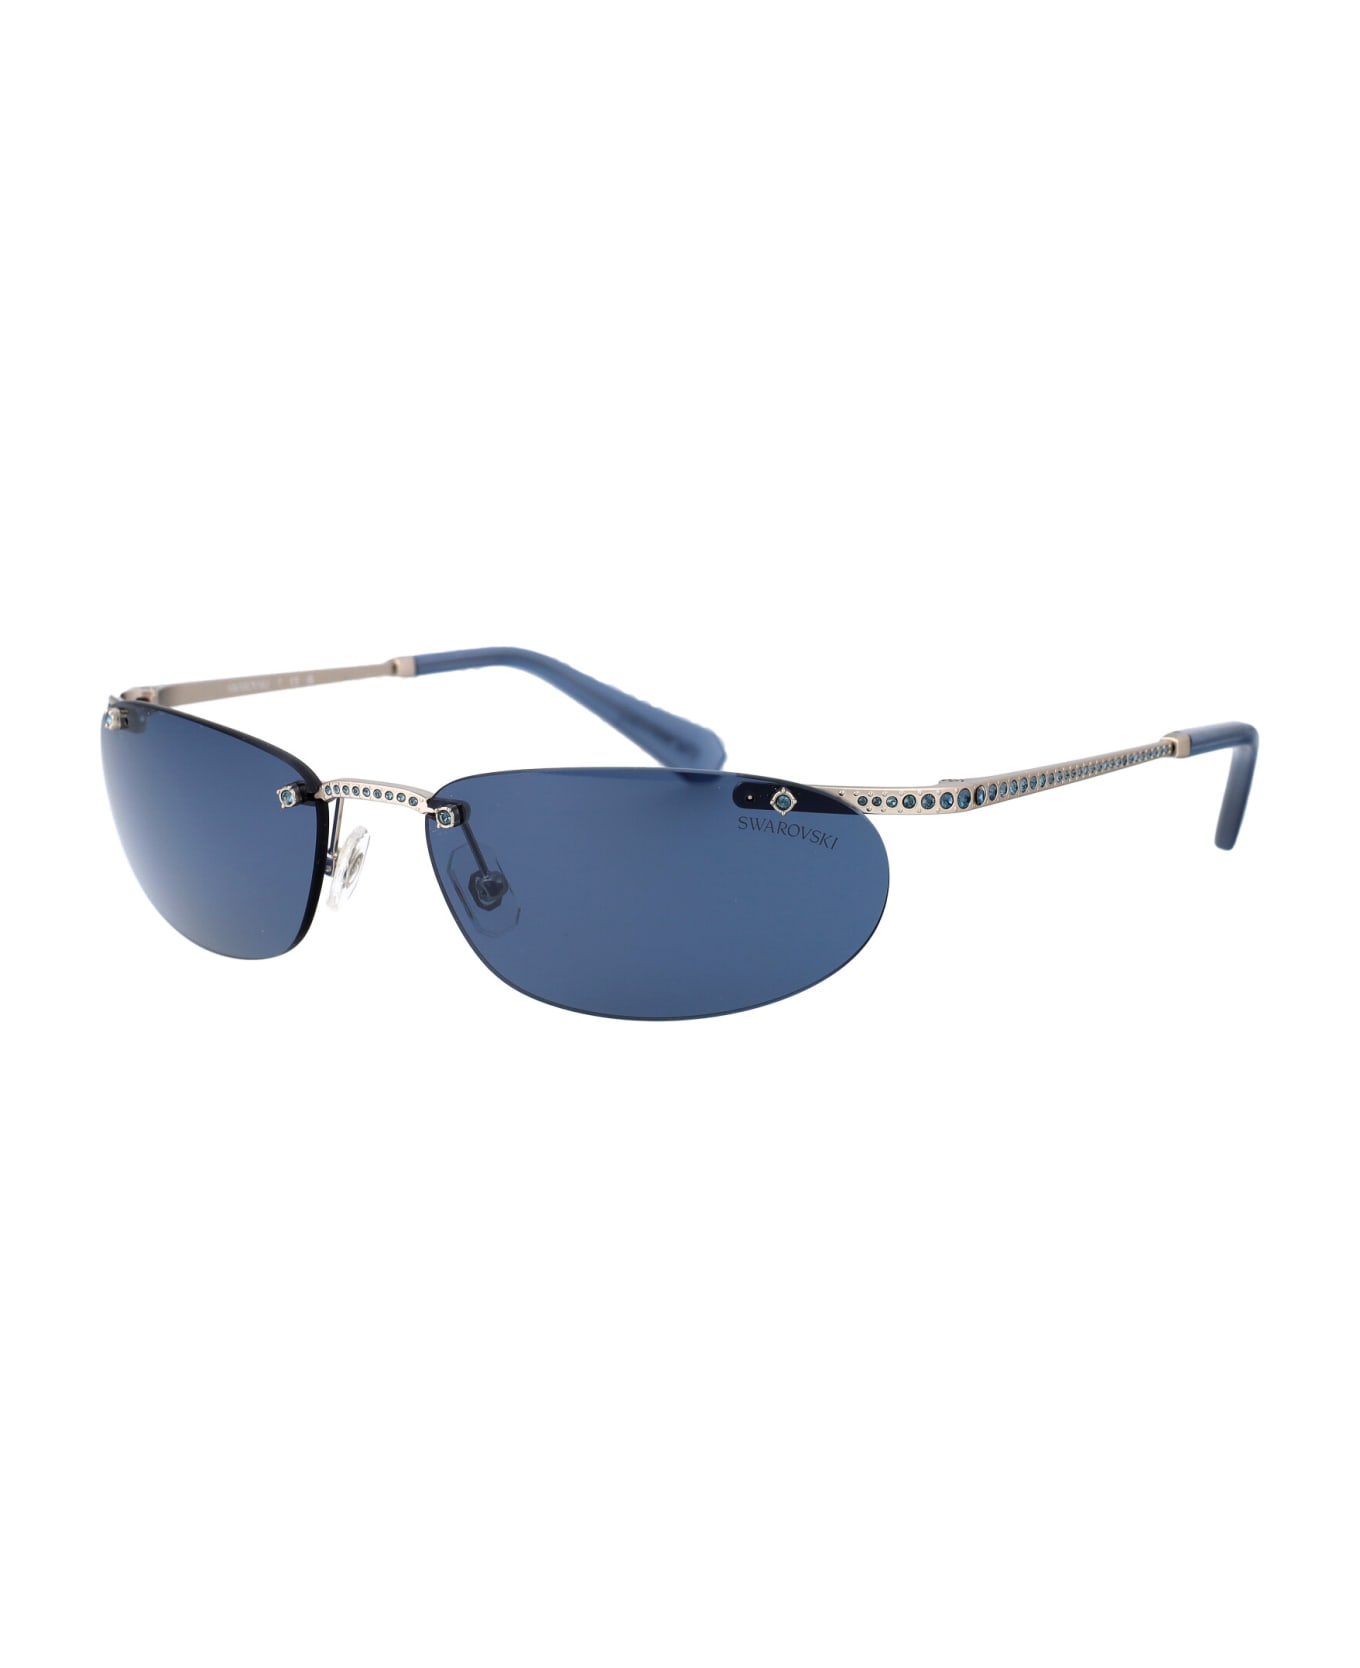 Swarovski 0sk7019 Sunglasses - 402555 Matte Silver